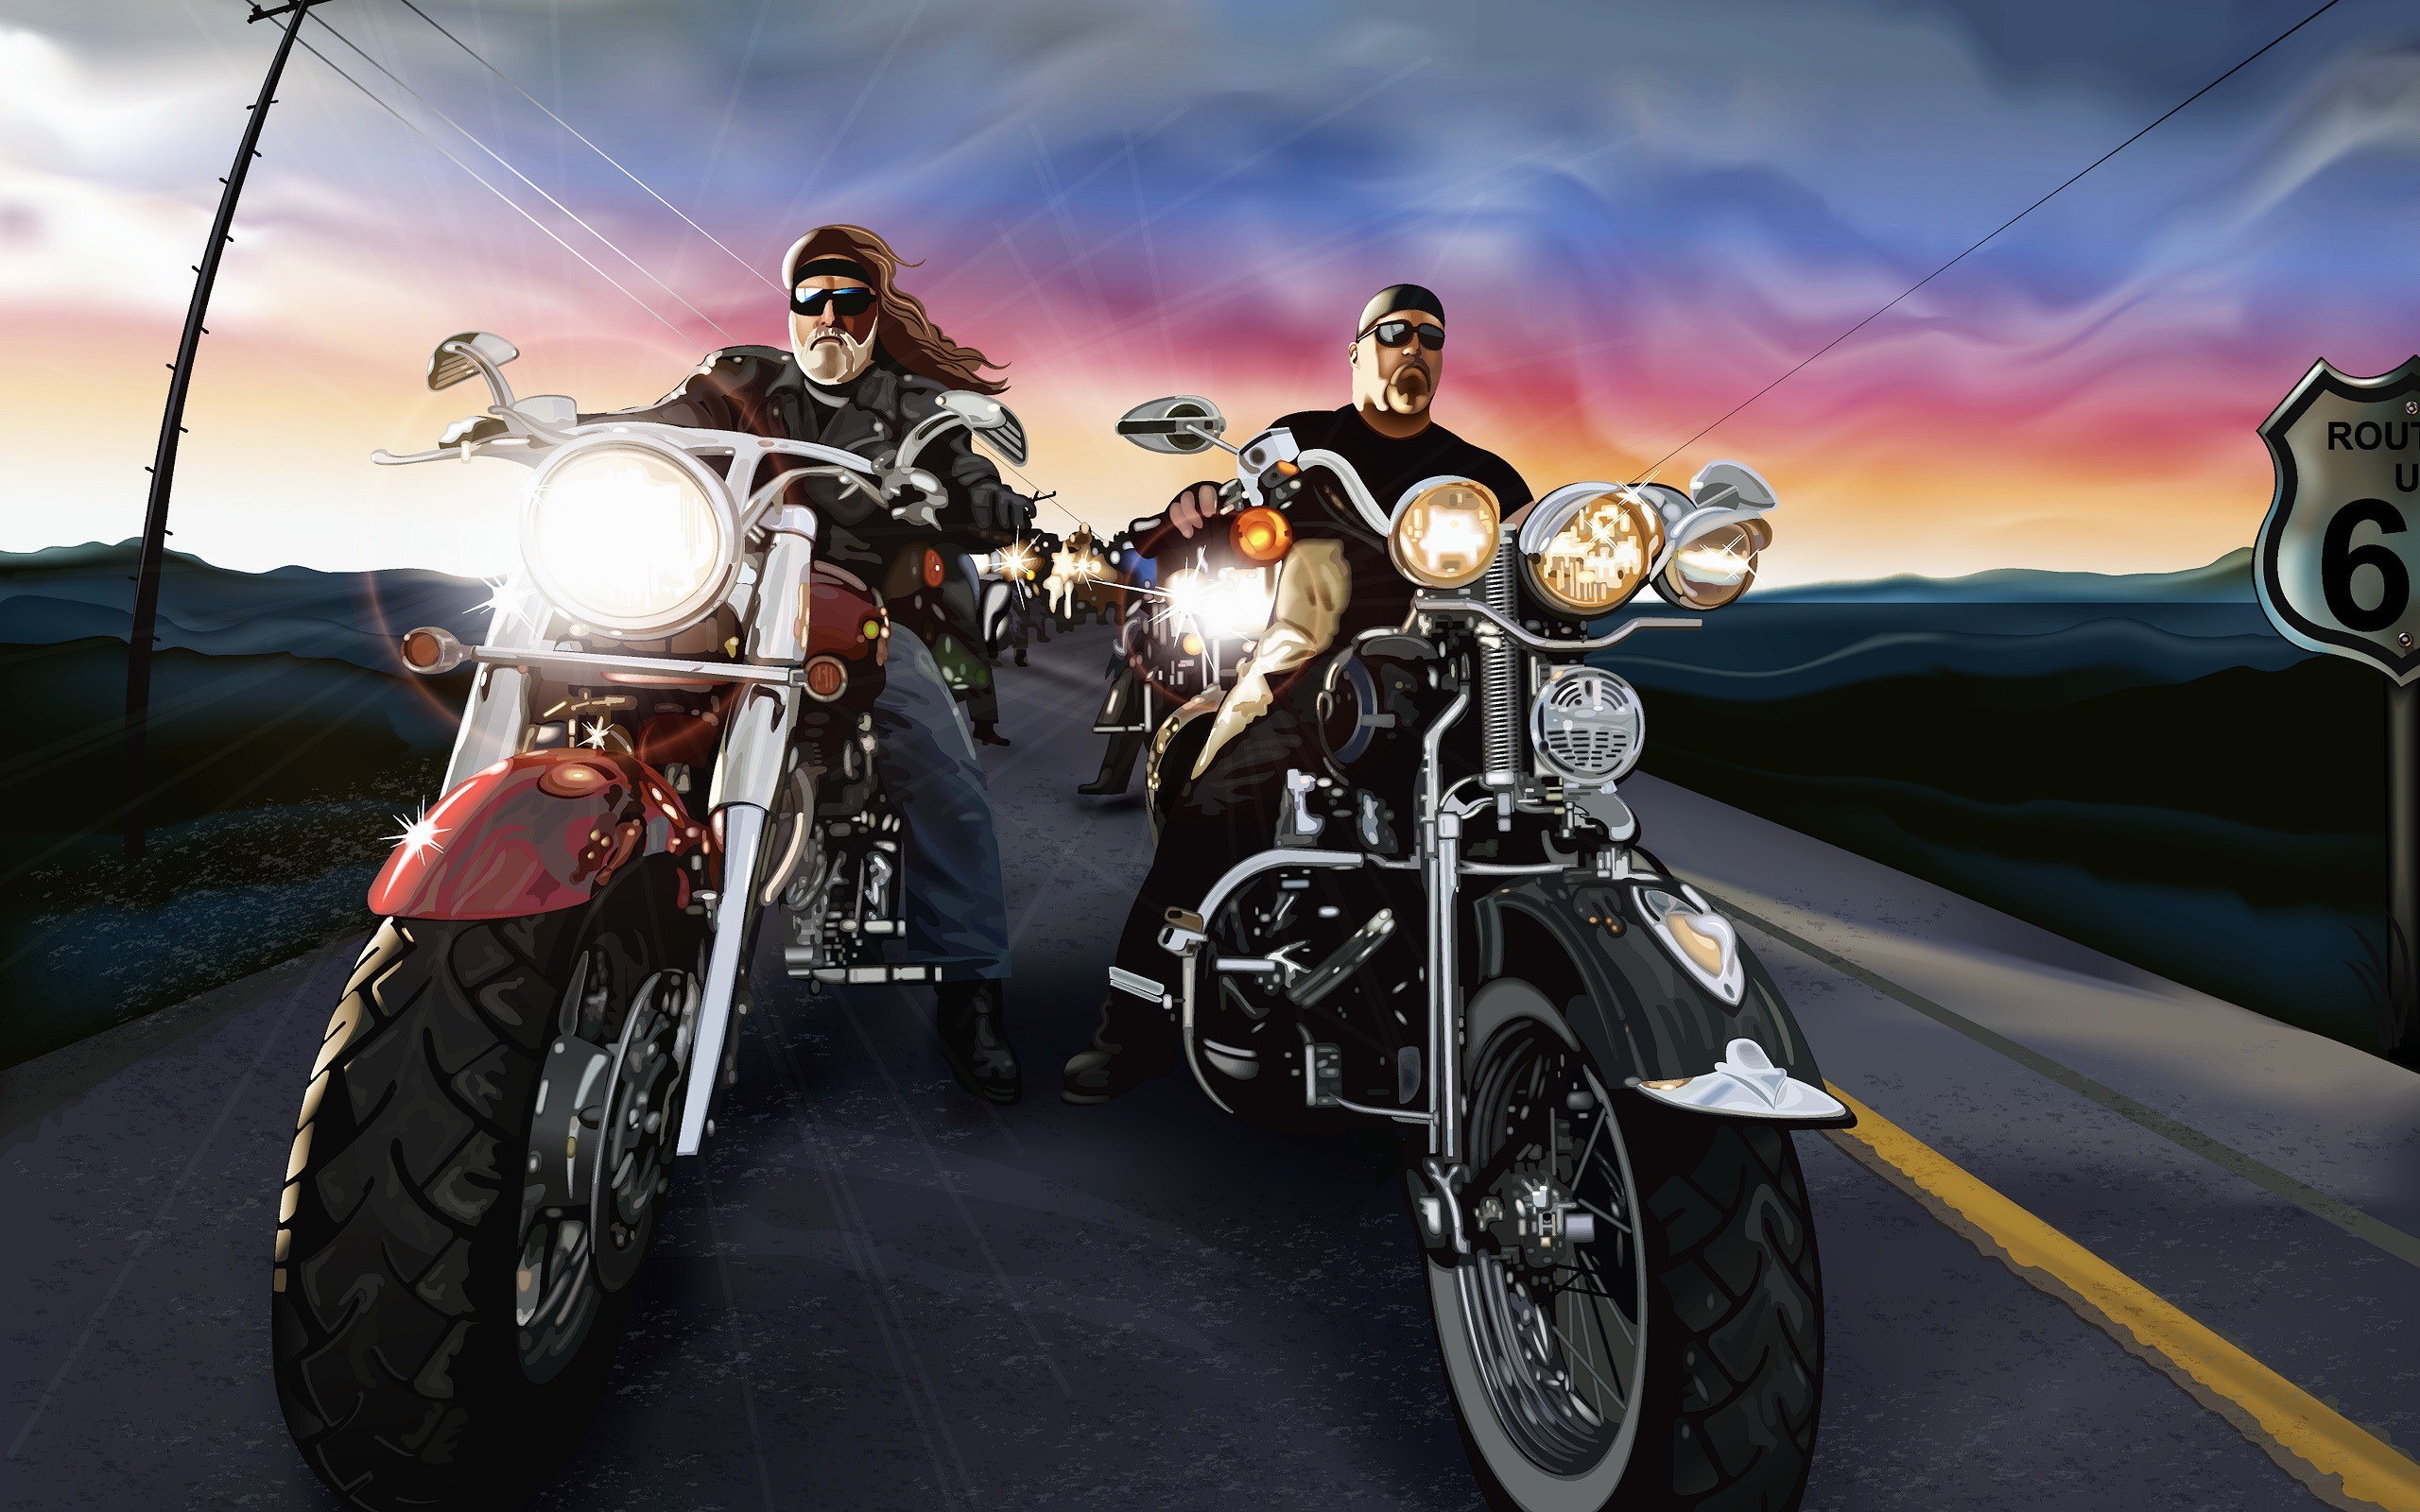 Harley Davidson Image 2560x1600